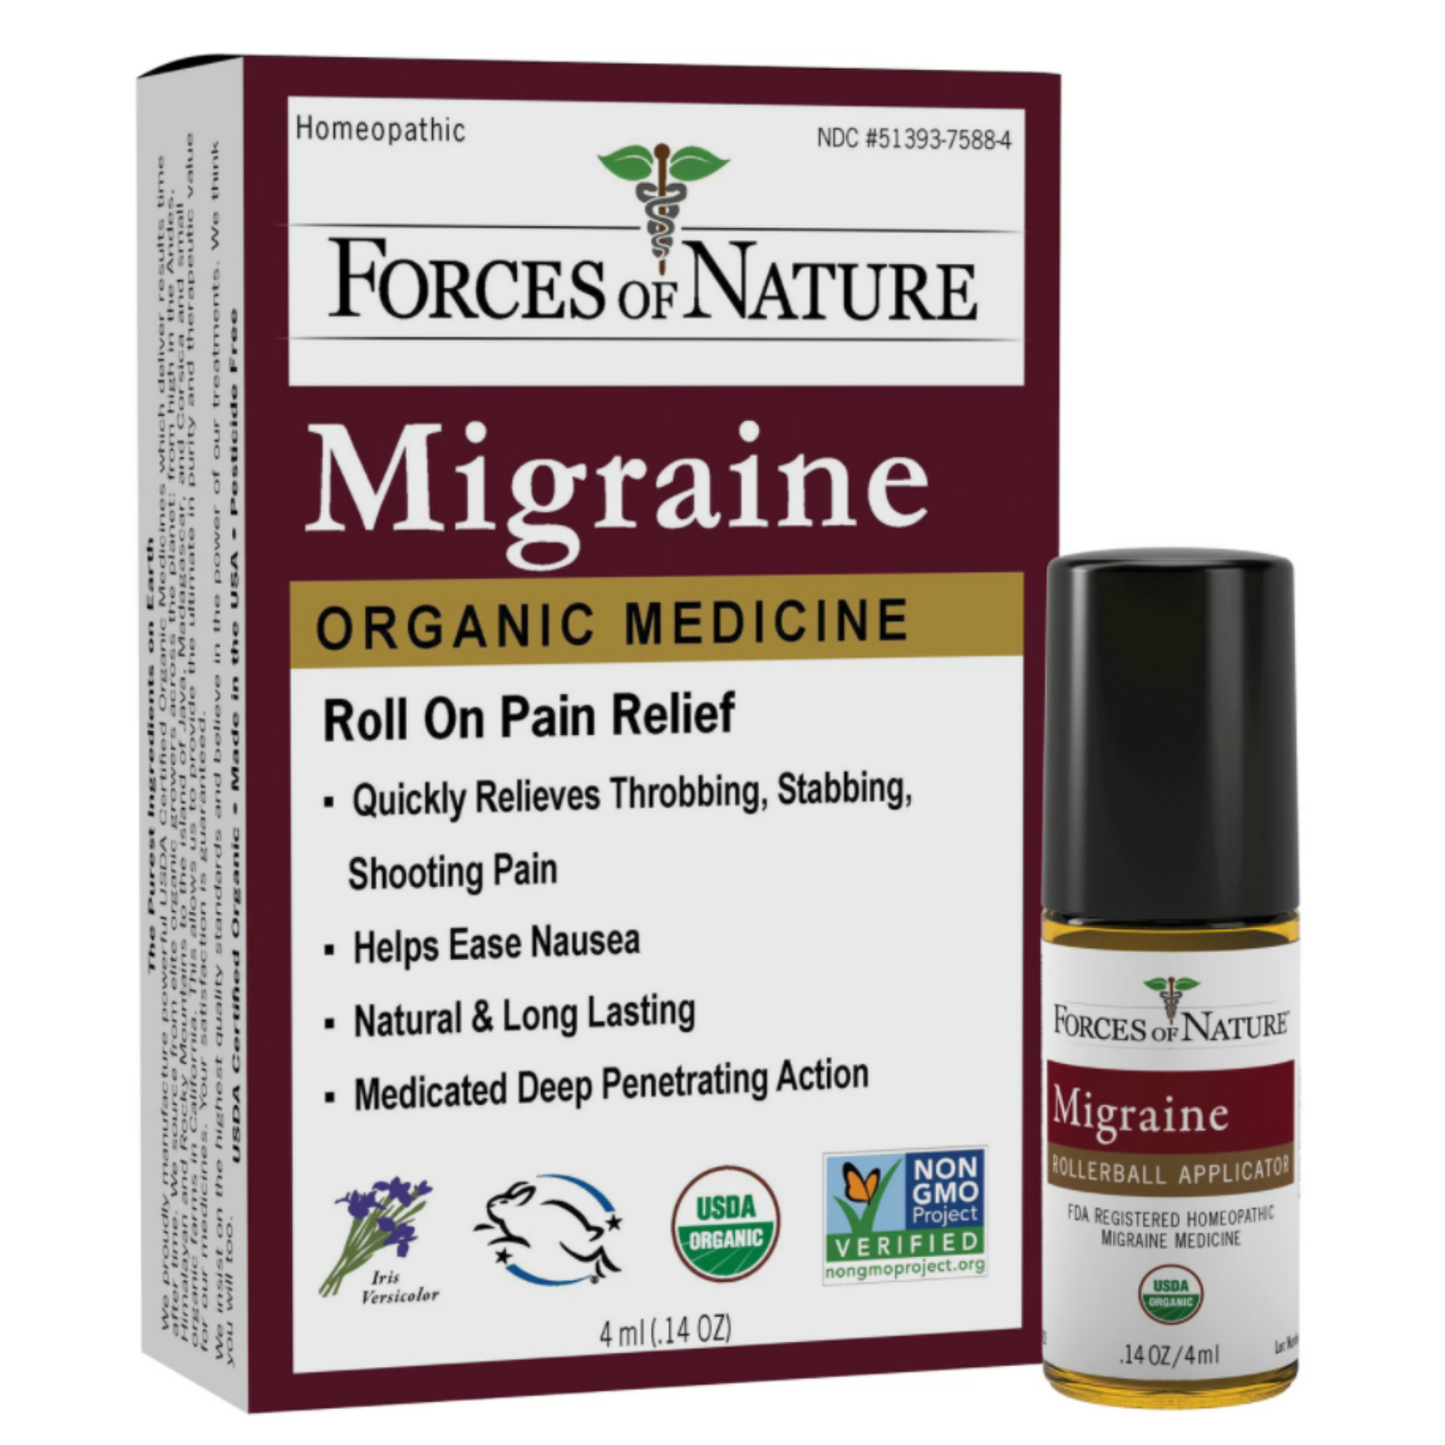 Primary image of Migraine Organic Medicine